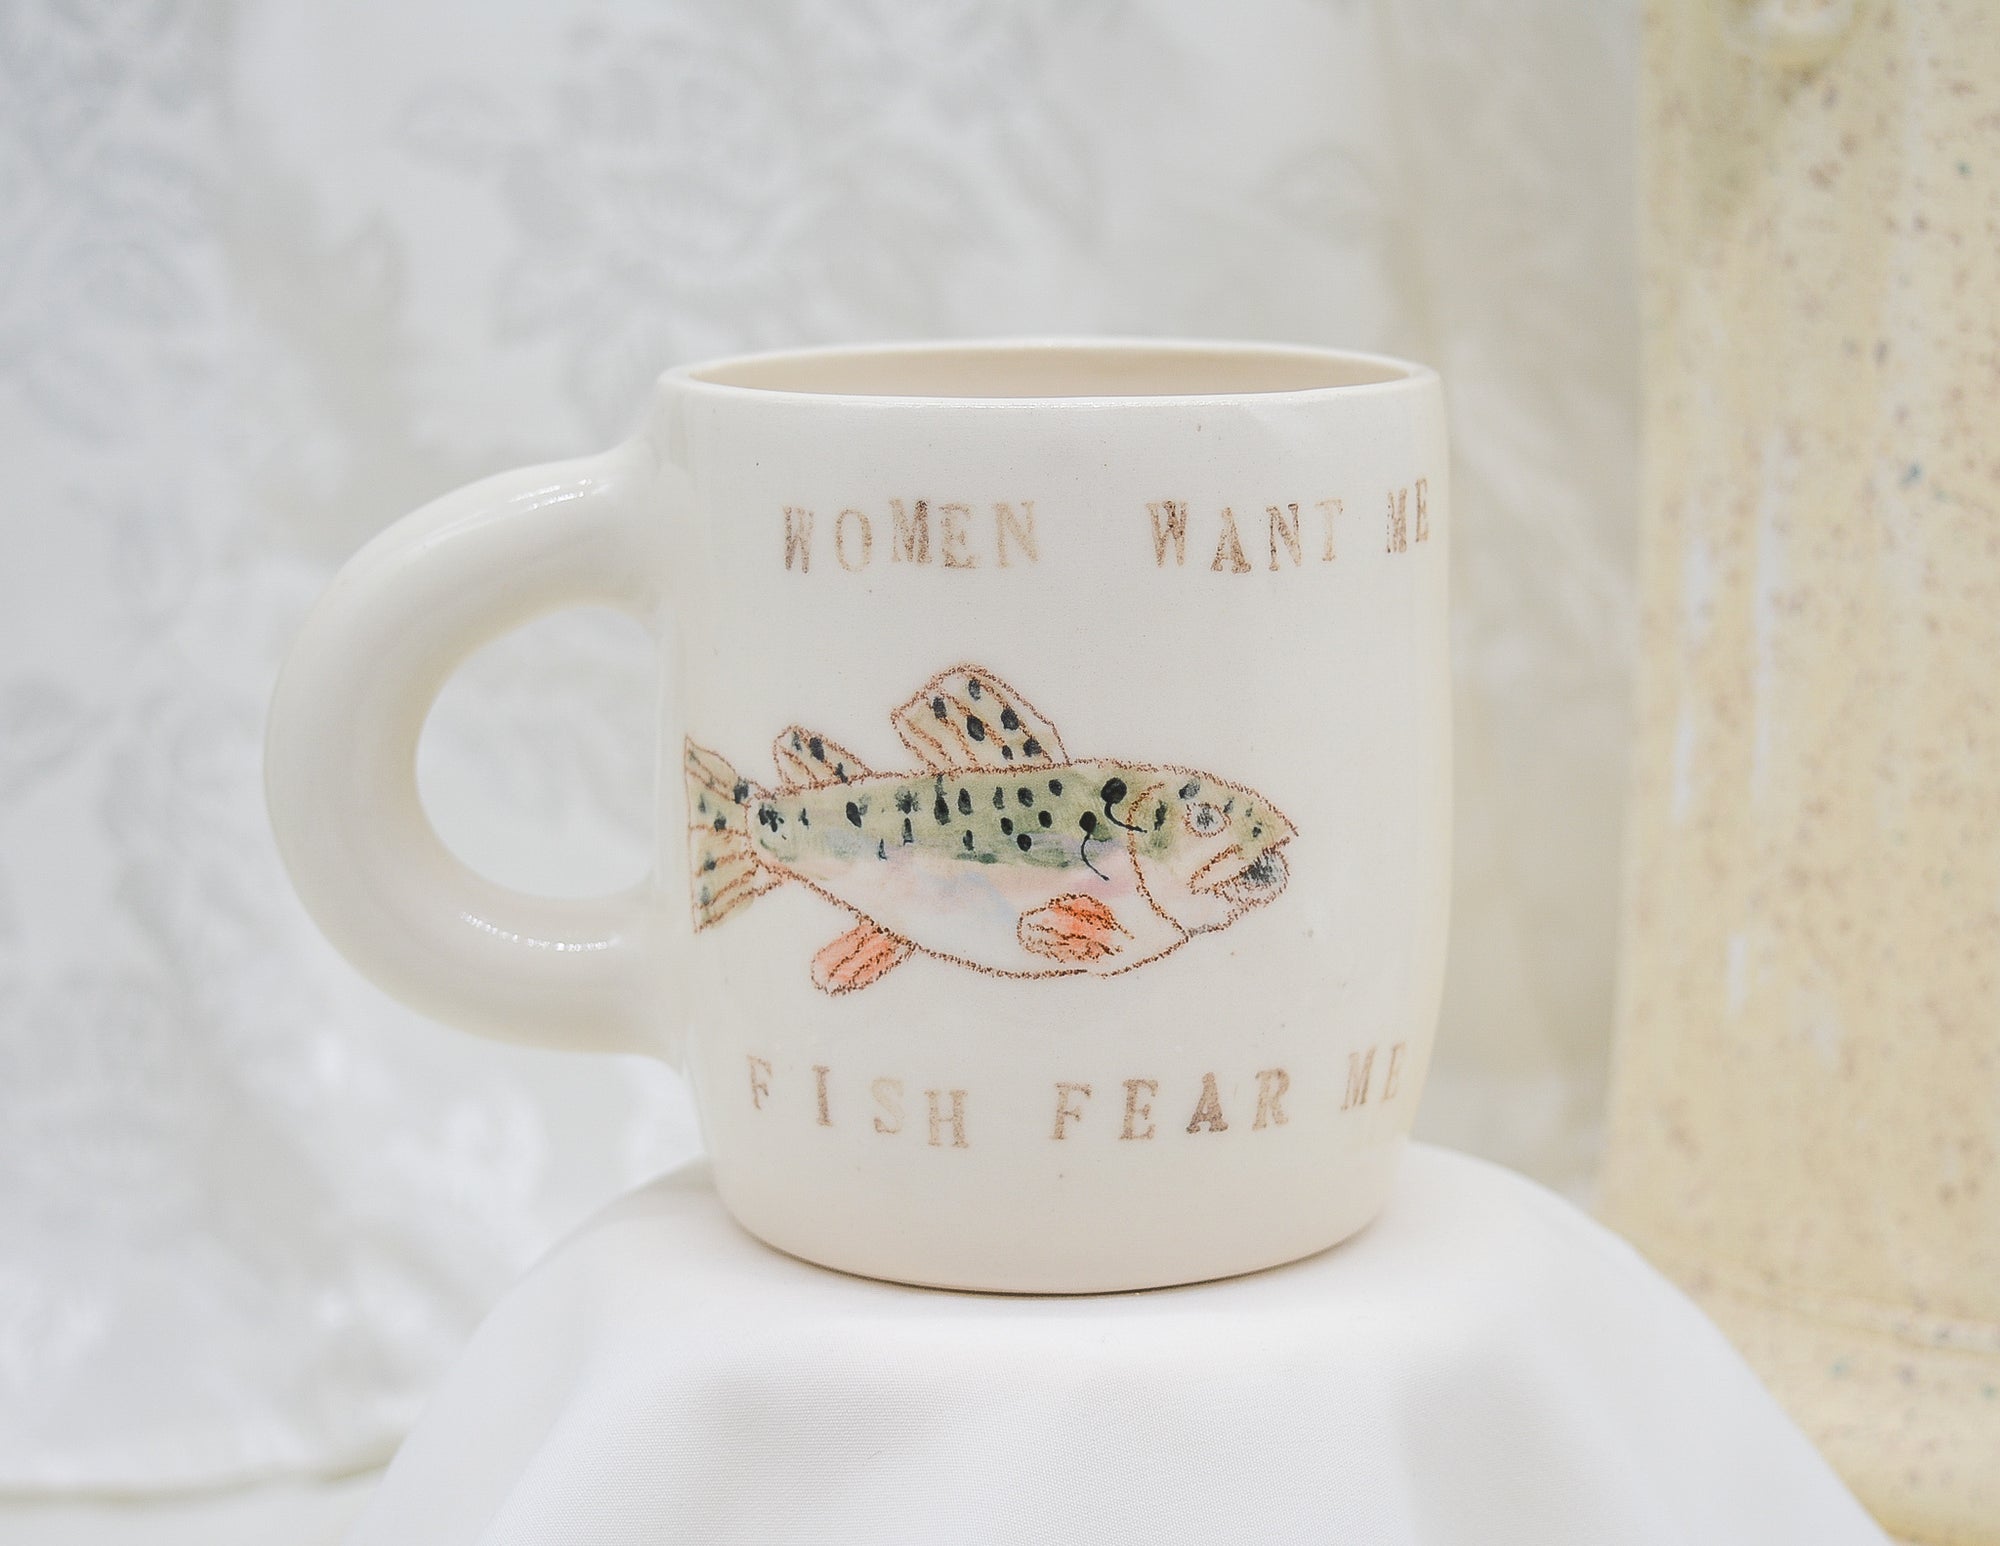 Woman Want Me Fish Fear Me Mug